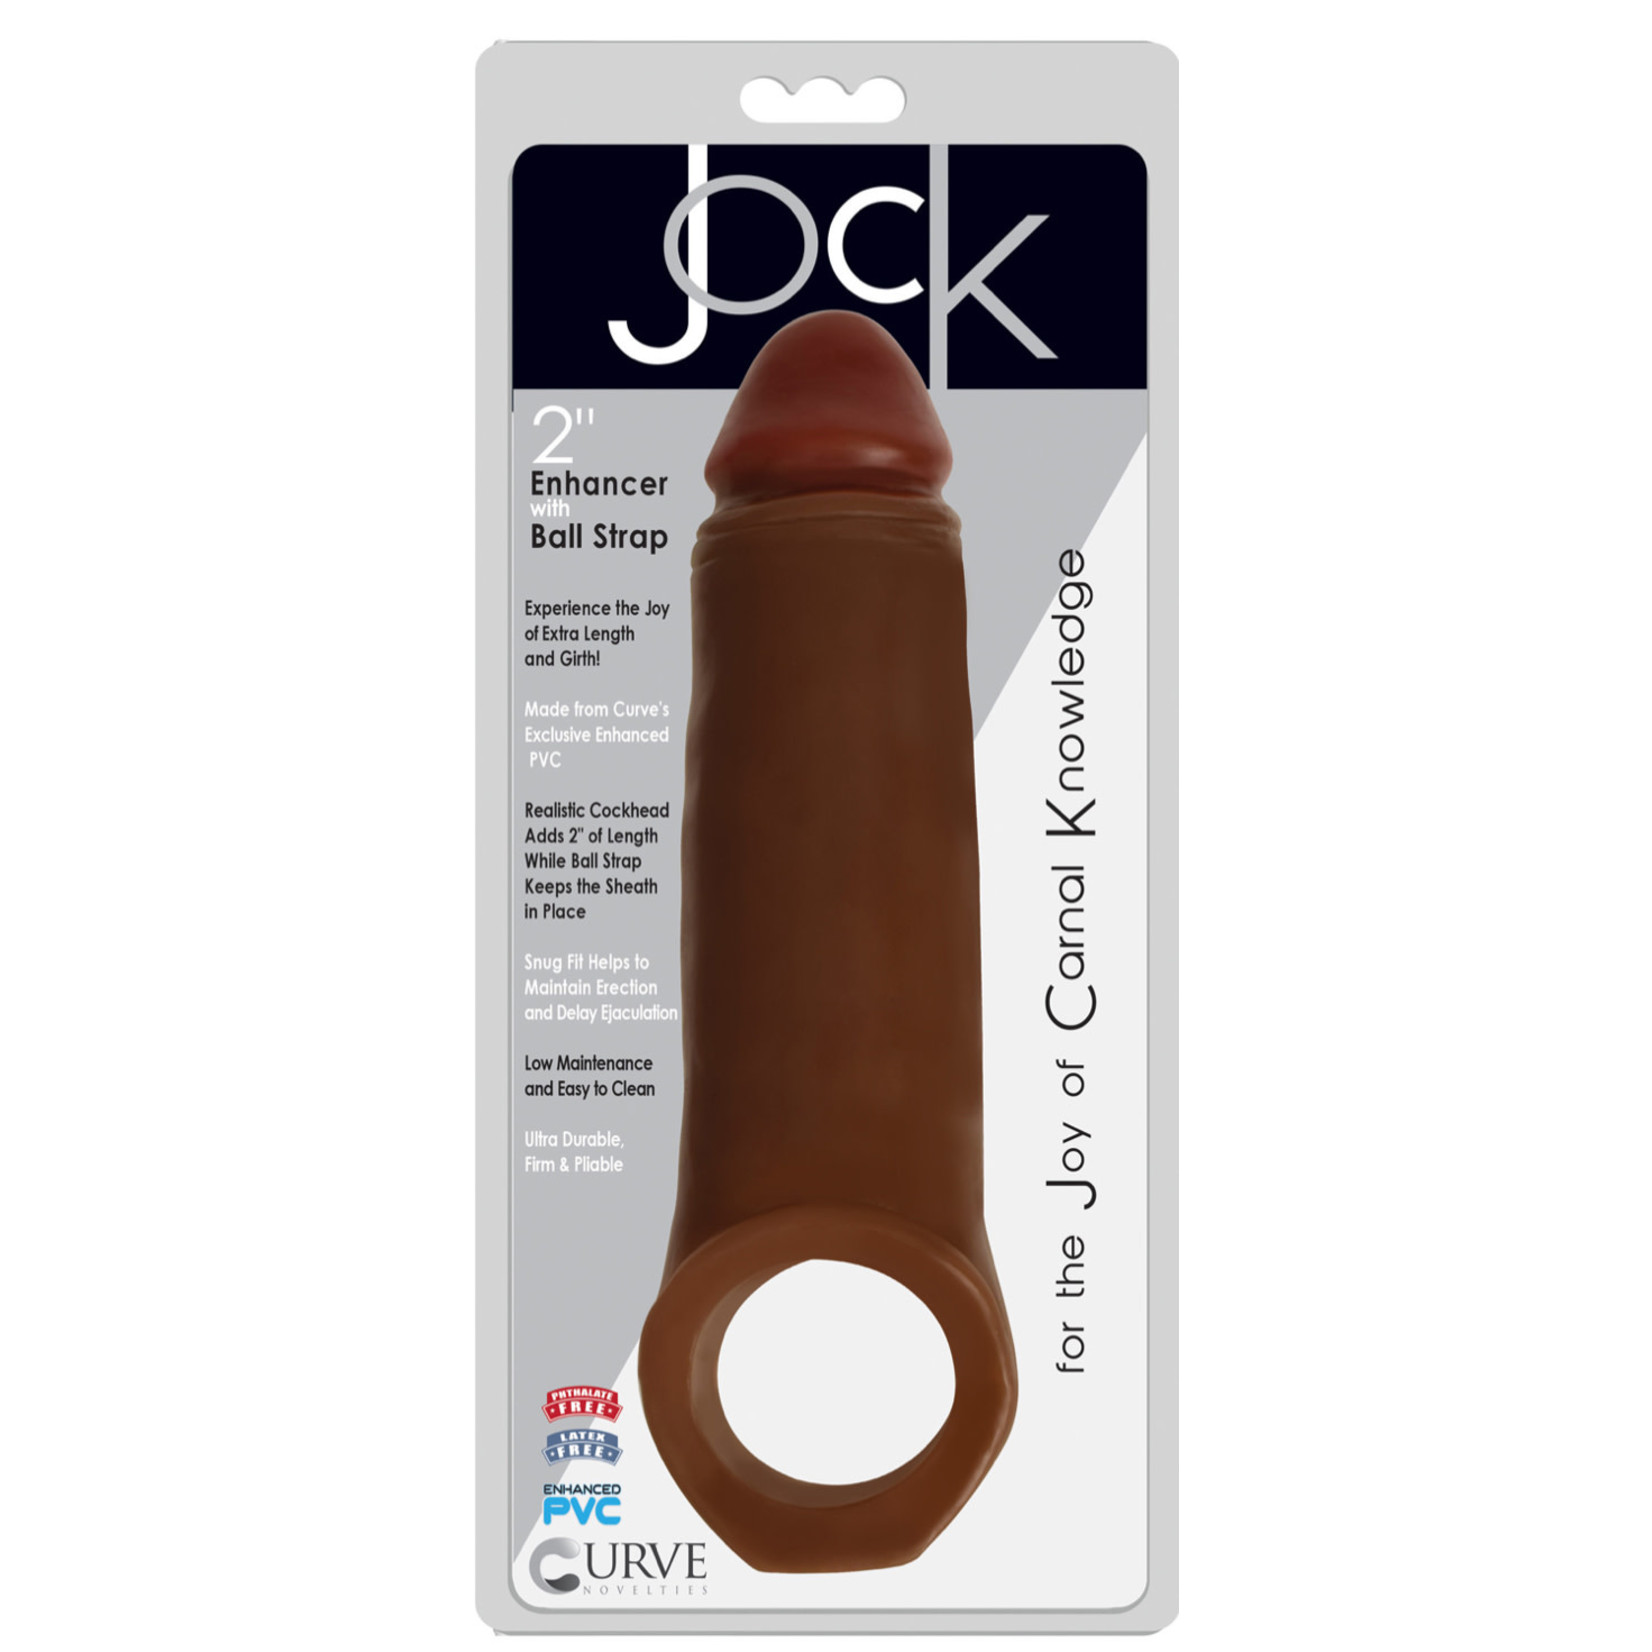 Jock Jock - 2” Enhancer with Ball Strap- Latte